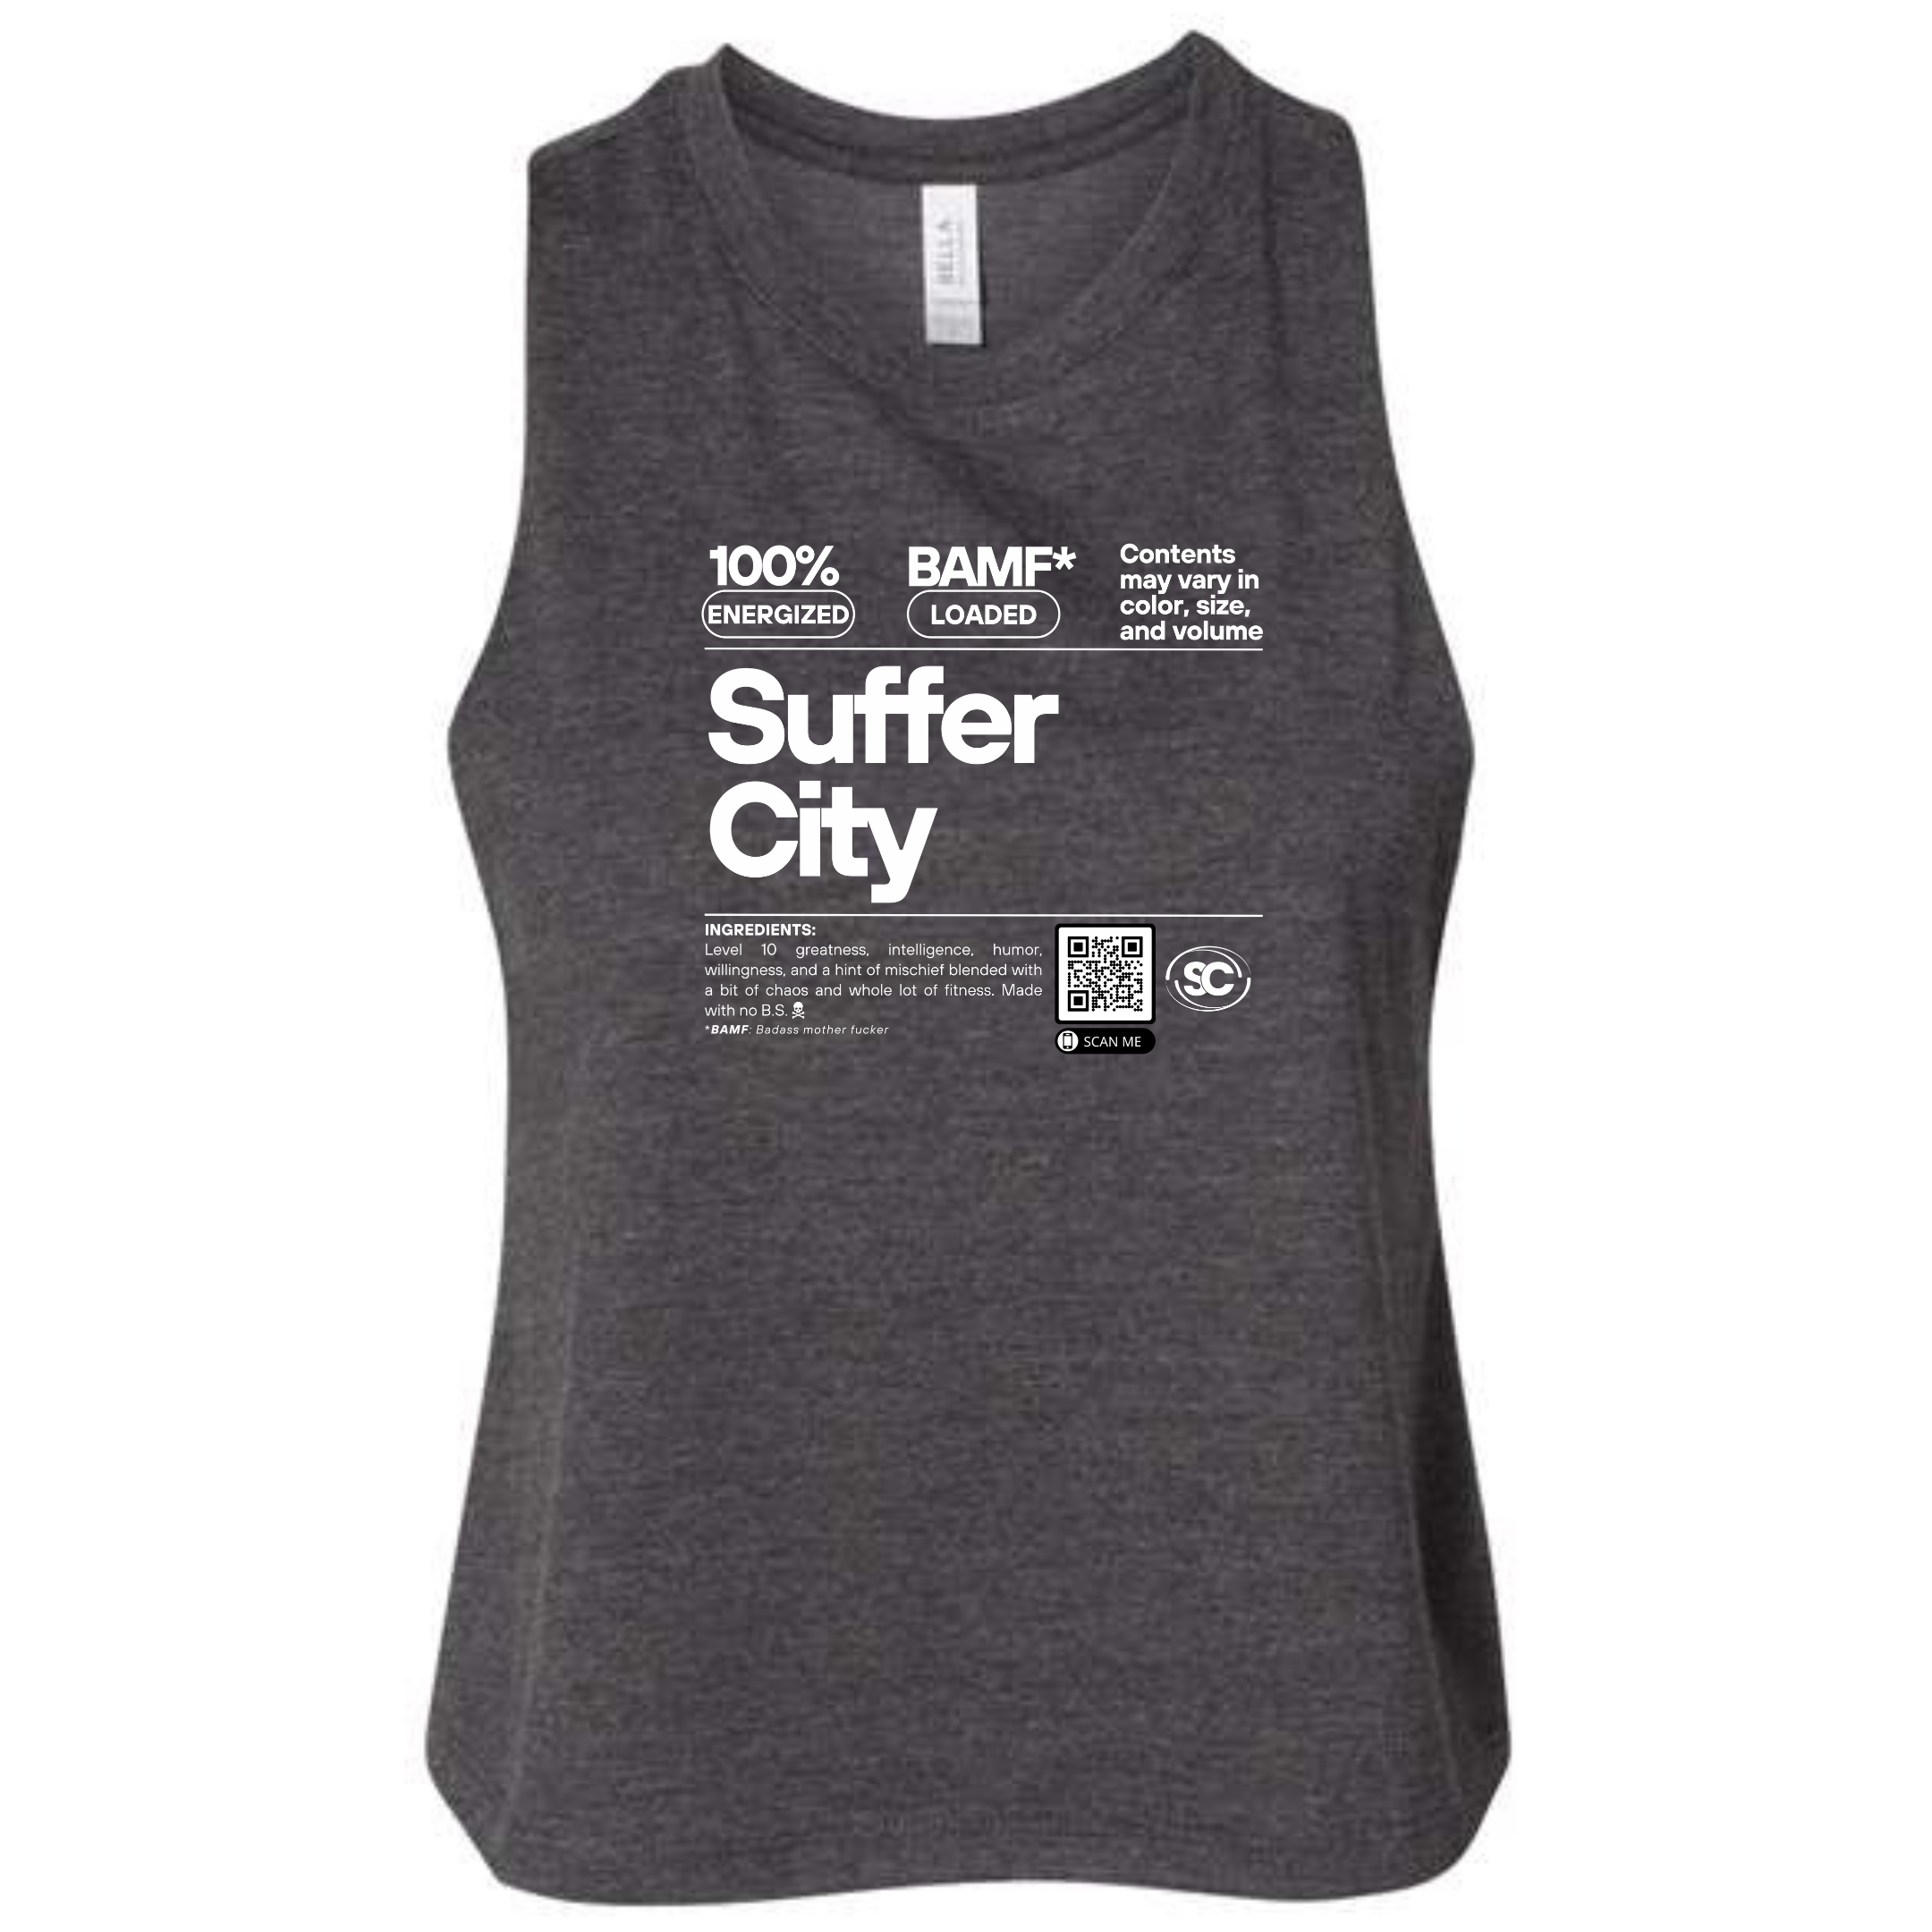 BAMF Suffer City “Cooler" Options